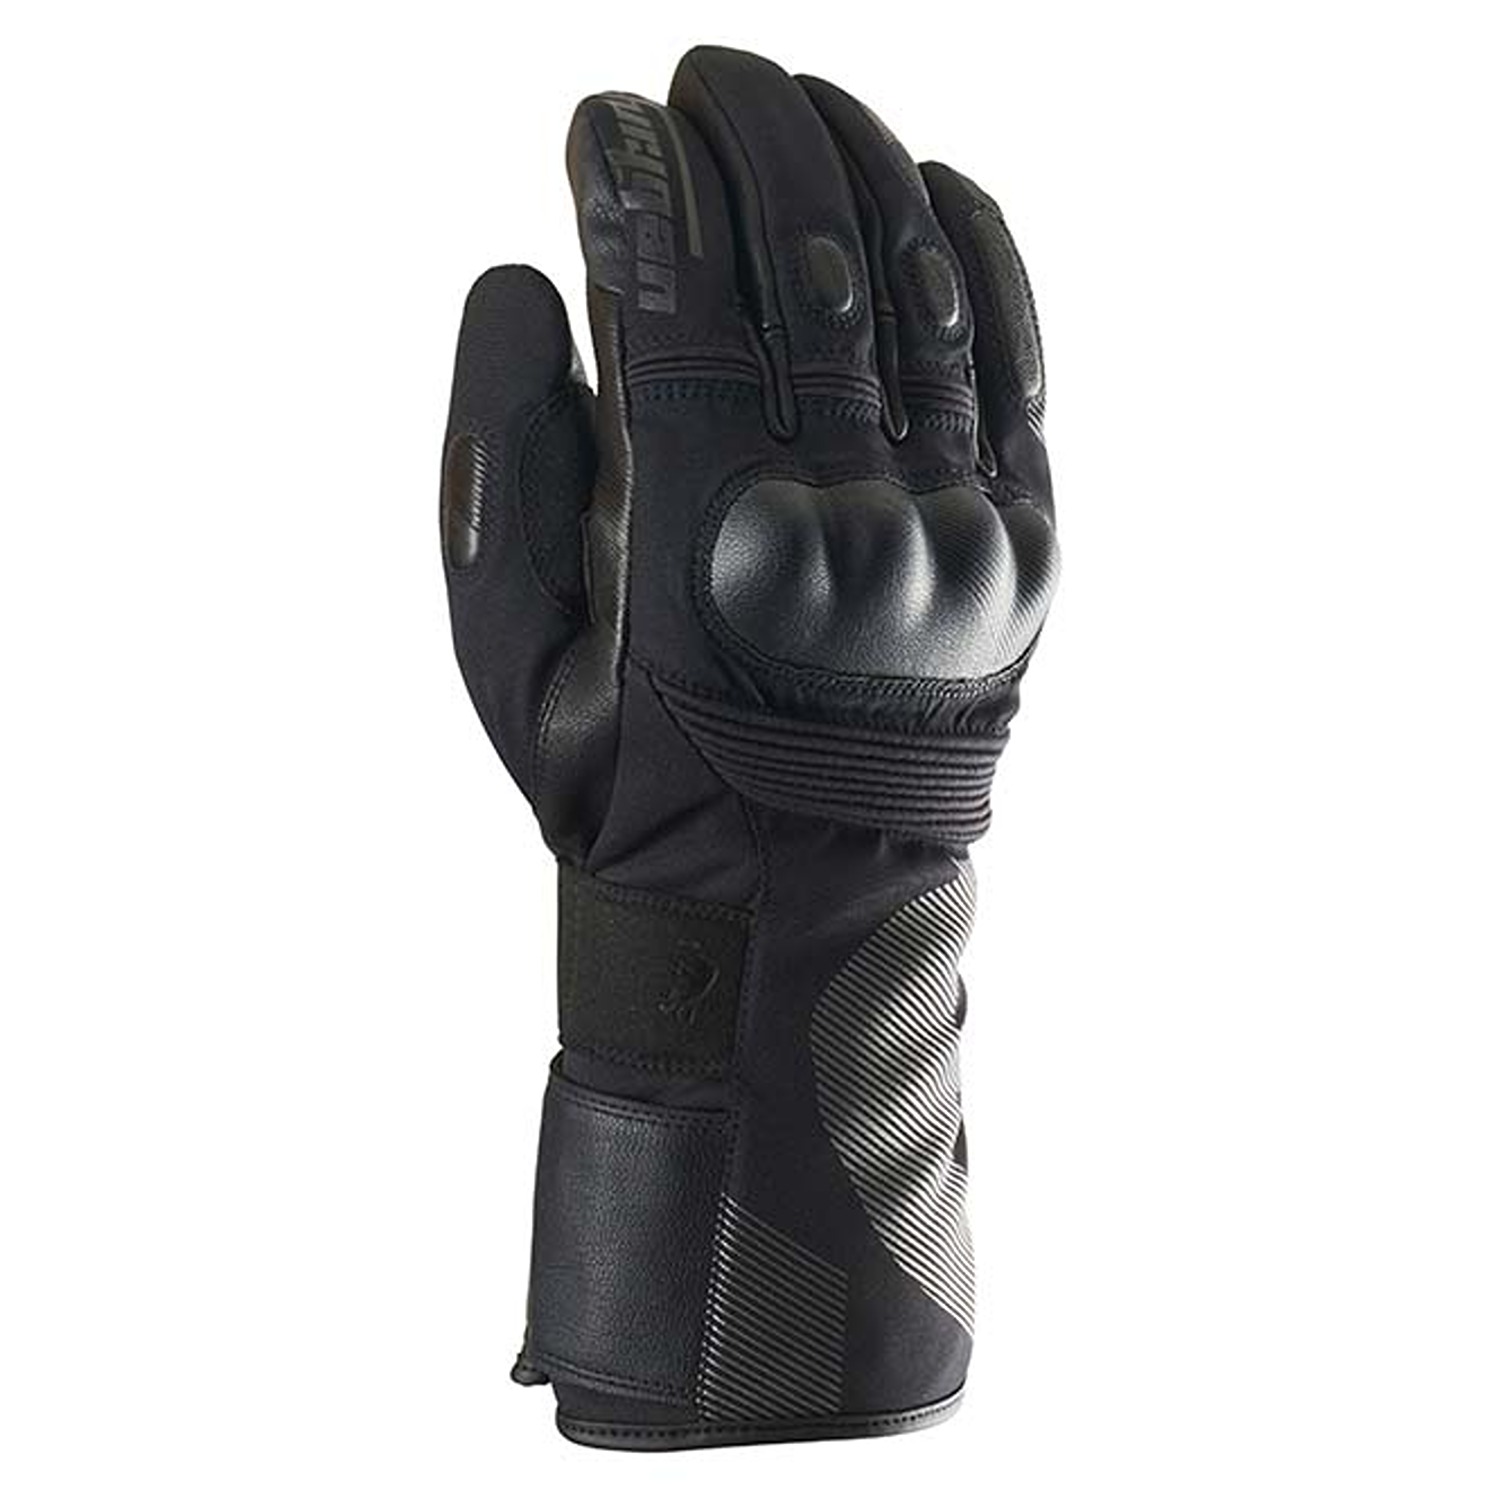 Image of Furygan Watts 375 Gloves Black Size M ID 3435980358211